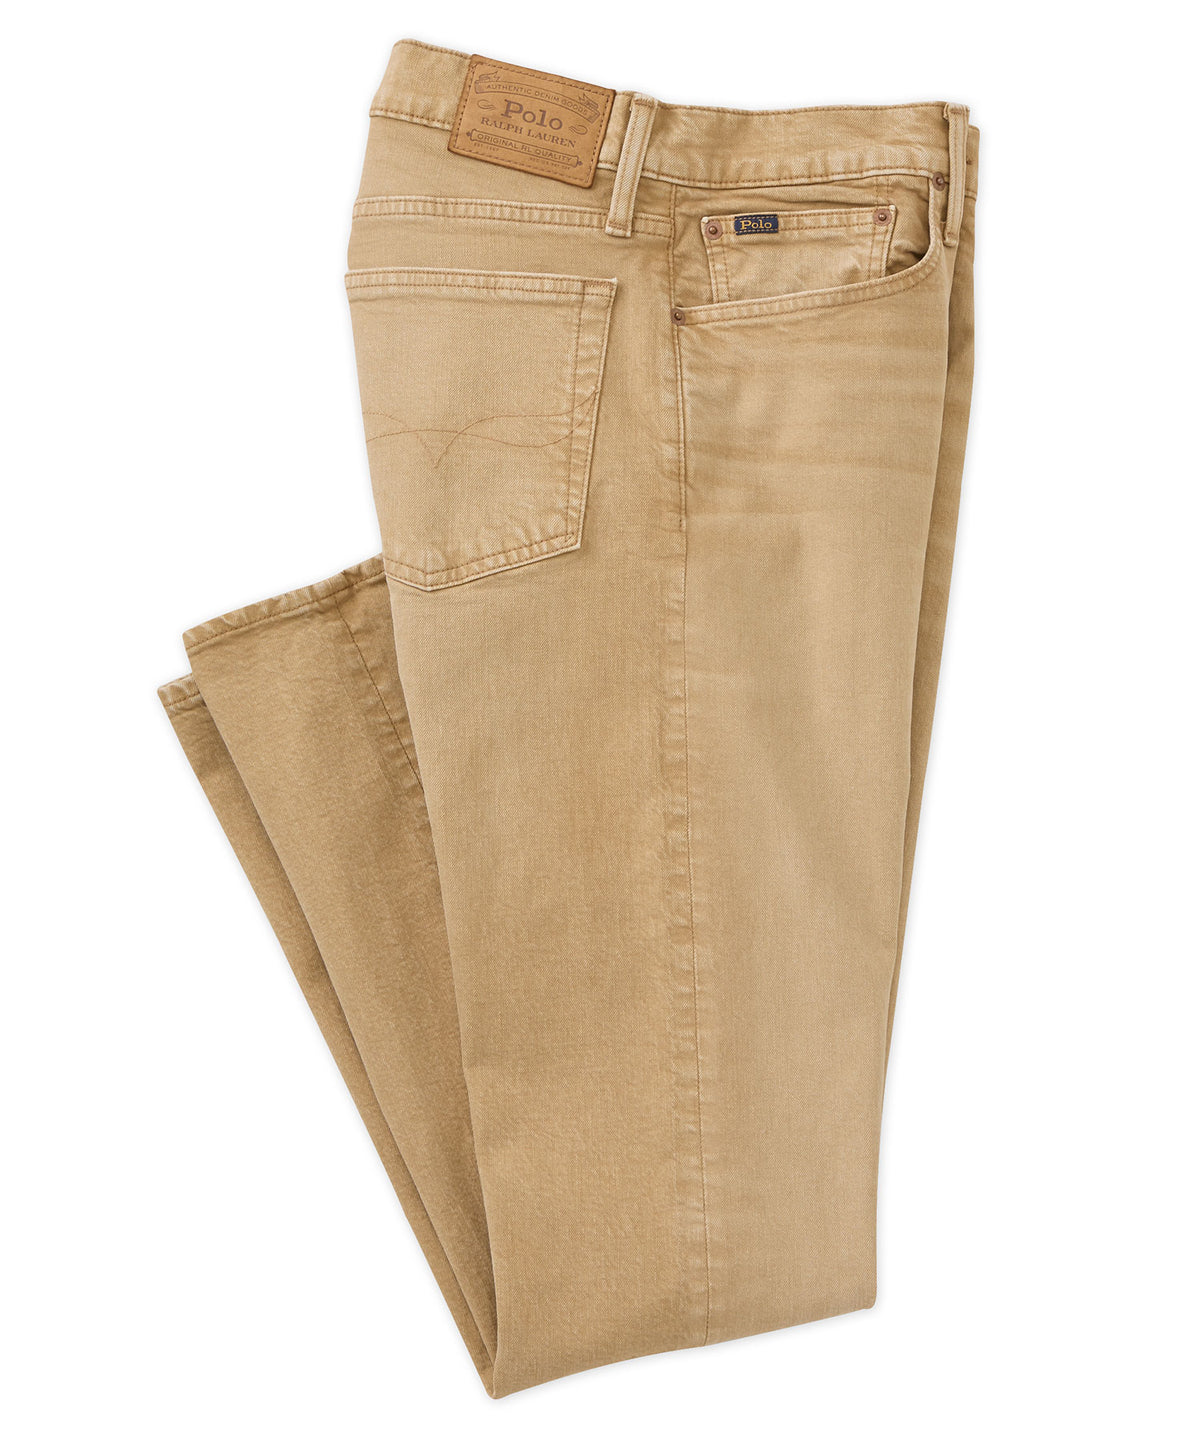 Polo Ralph Lauren Stretch Denim 5-Pocket Jeans - Westport Big & Tall